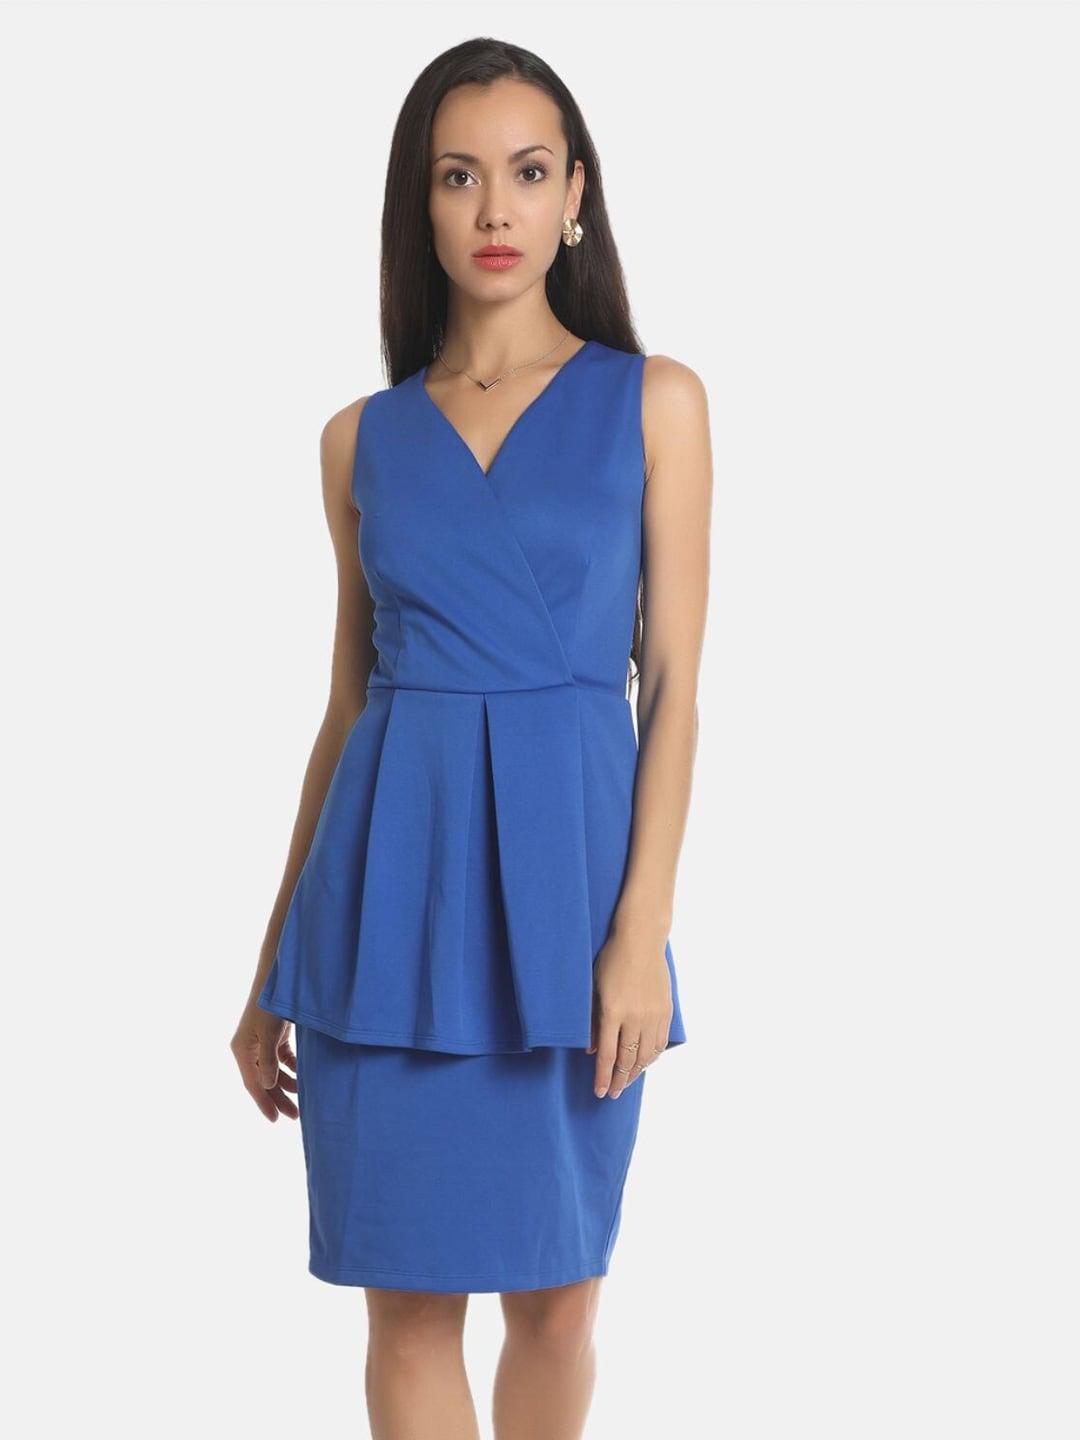 AARA Blue Solid V-neck Peplum Dress